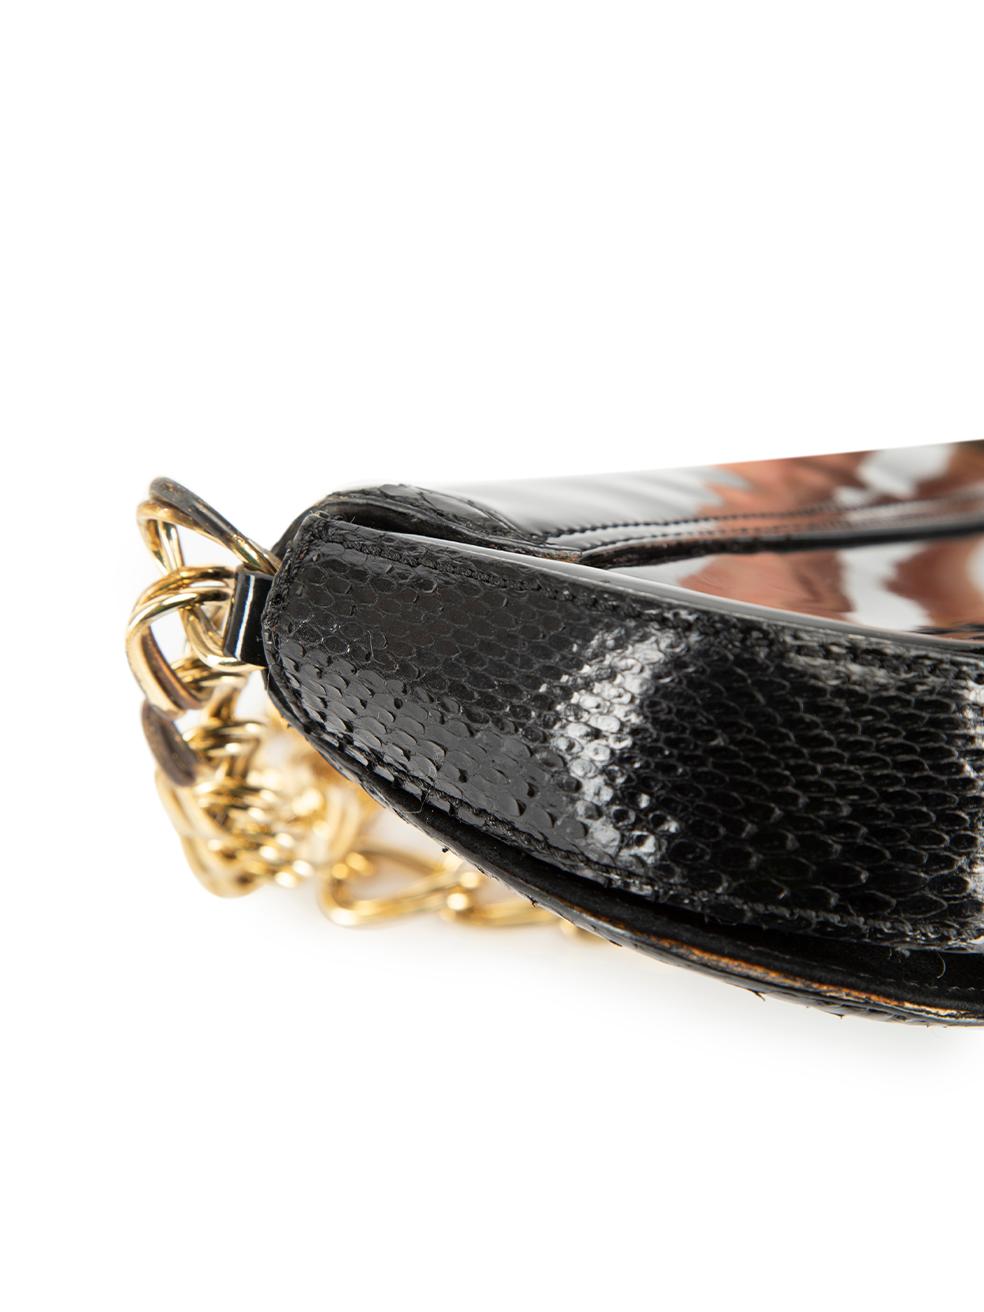 Roberto Cavalli Women's Black Patent Leather Snakeskin Panel Shoulder Bag 4